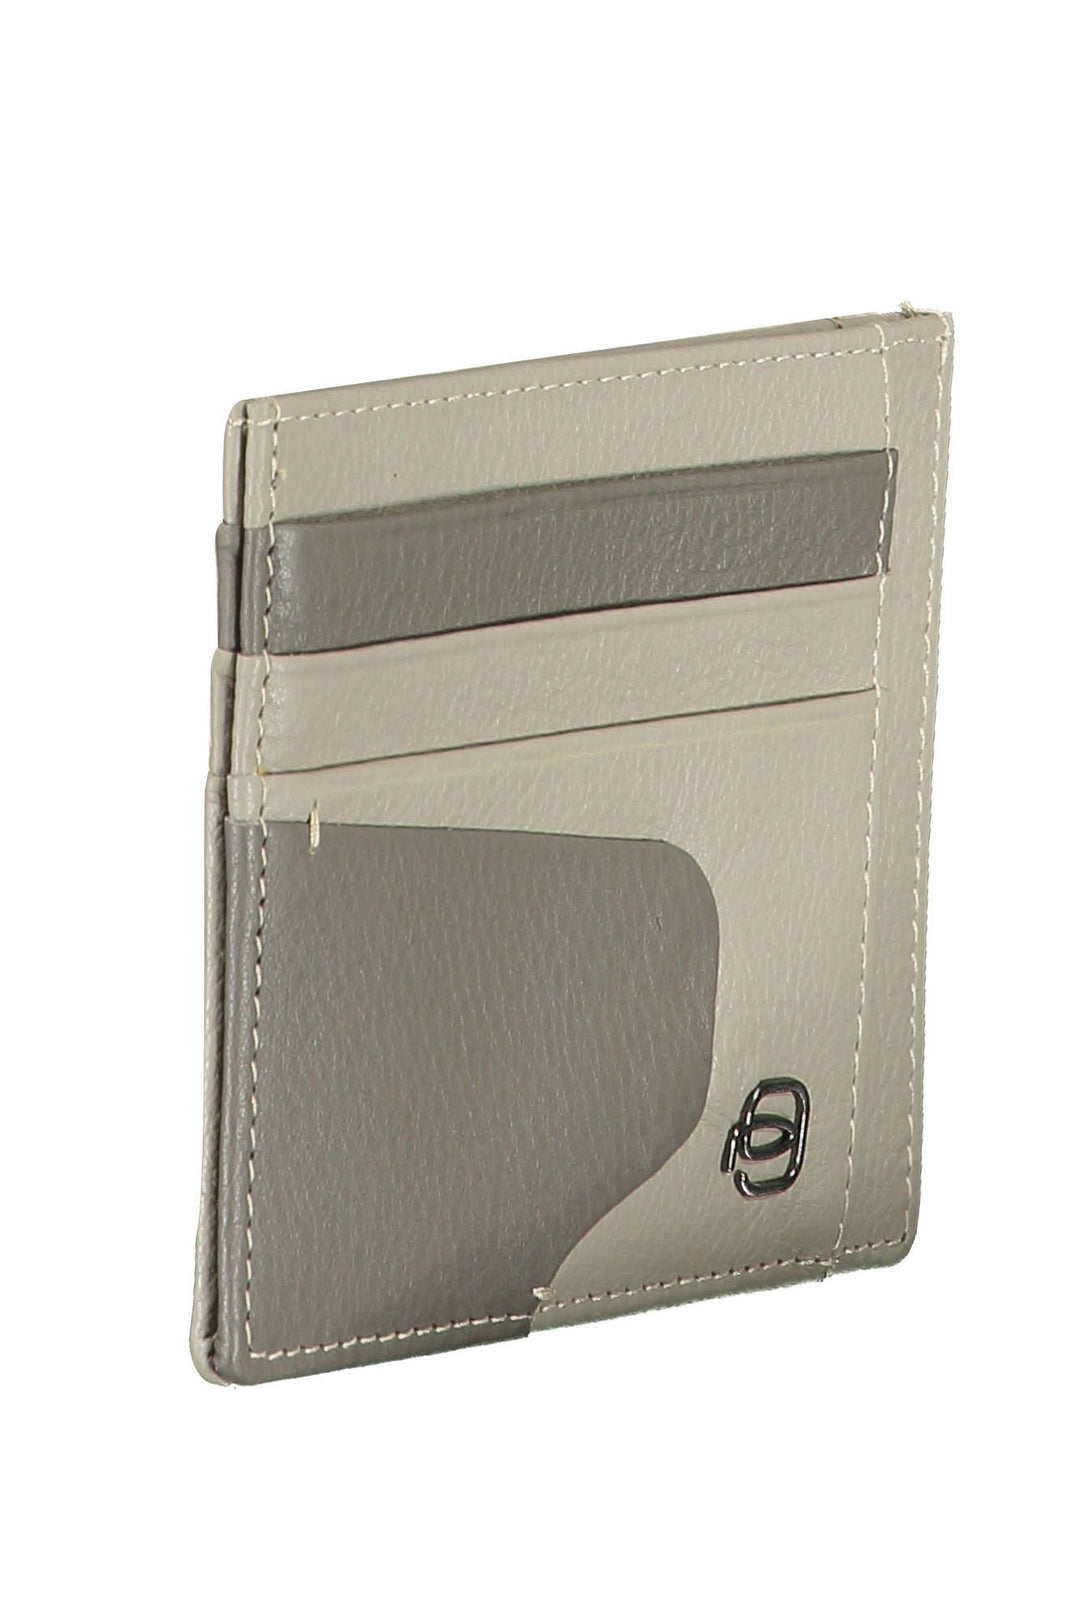 Piquadro Sleek Gray Leather RFID Card Holder